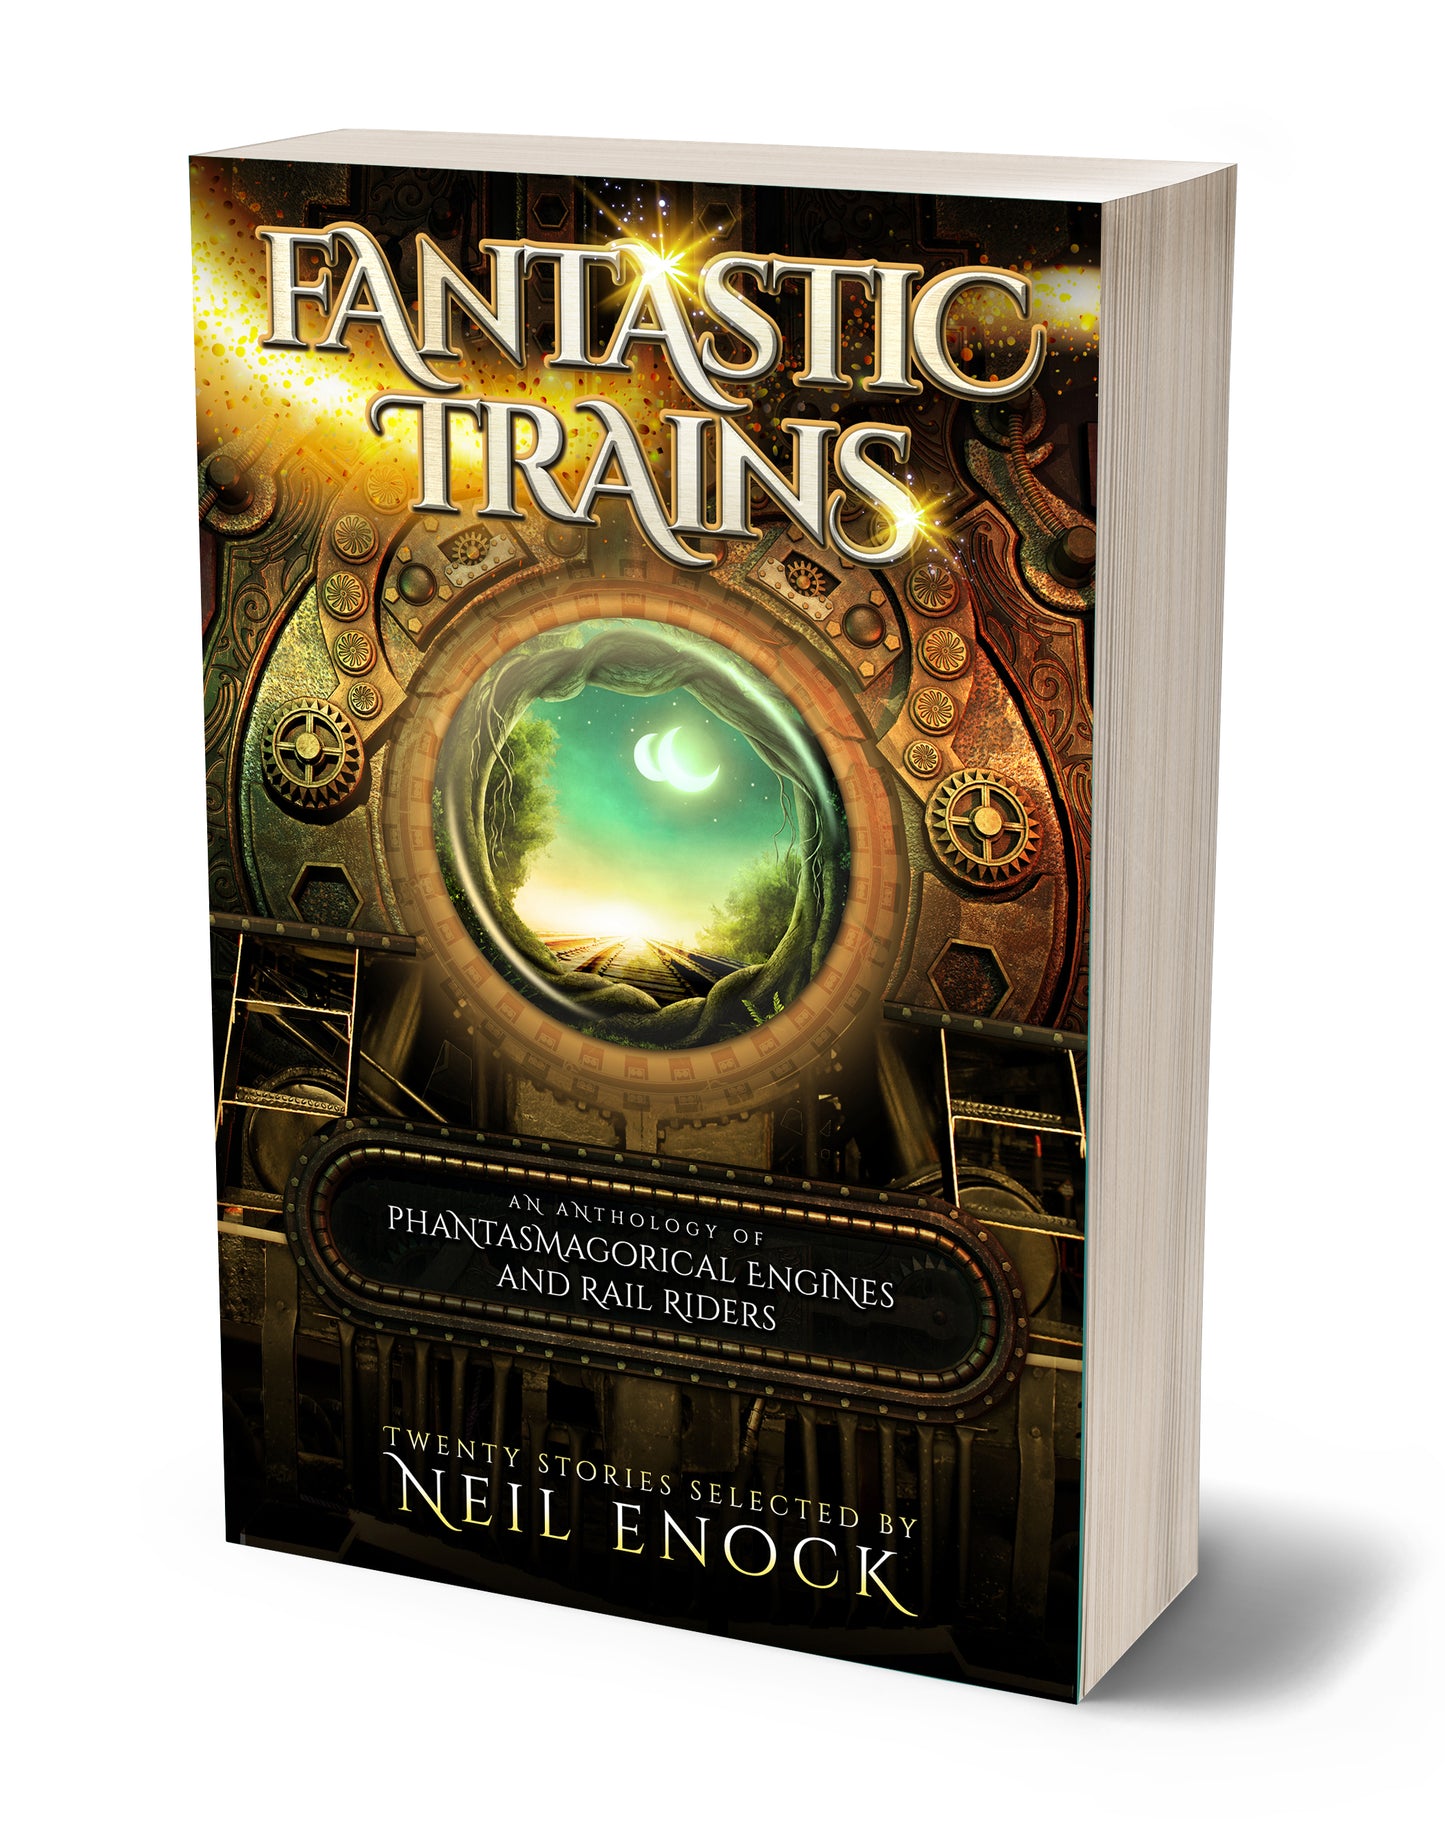 Fantastic Trains... Available on Amazon!